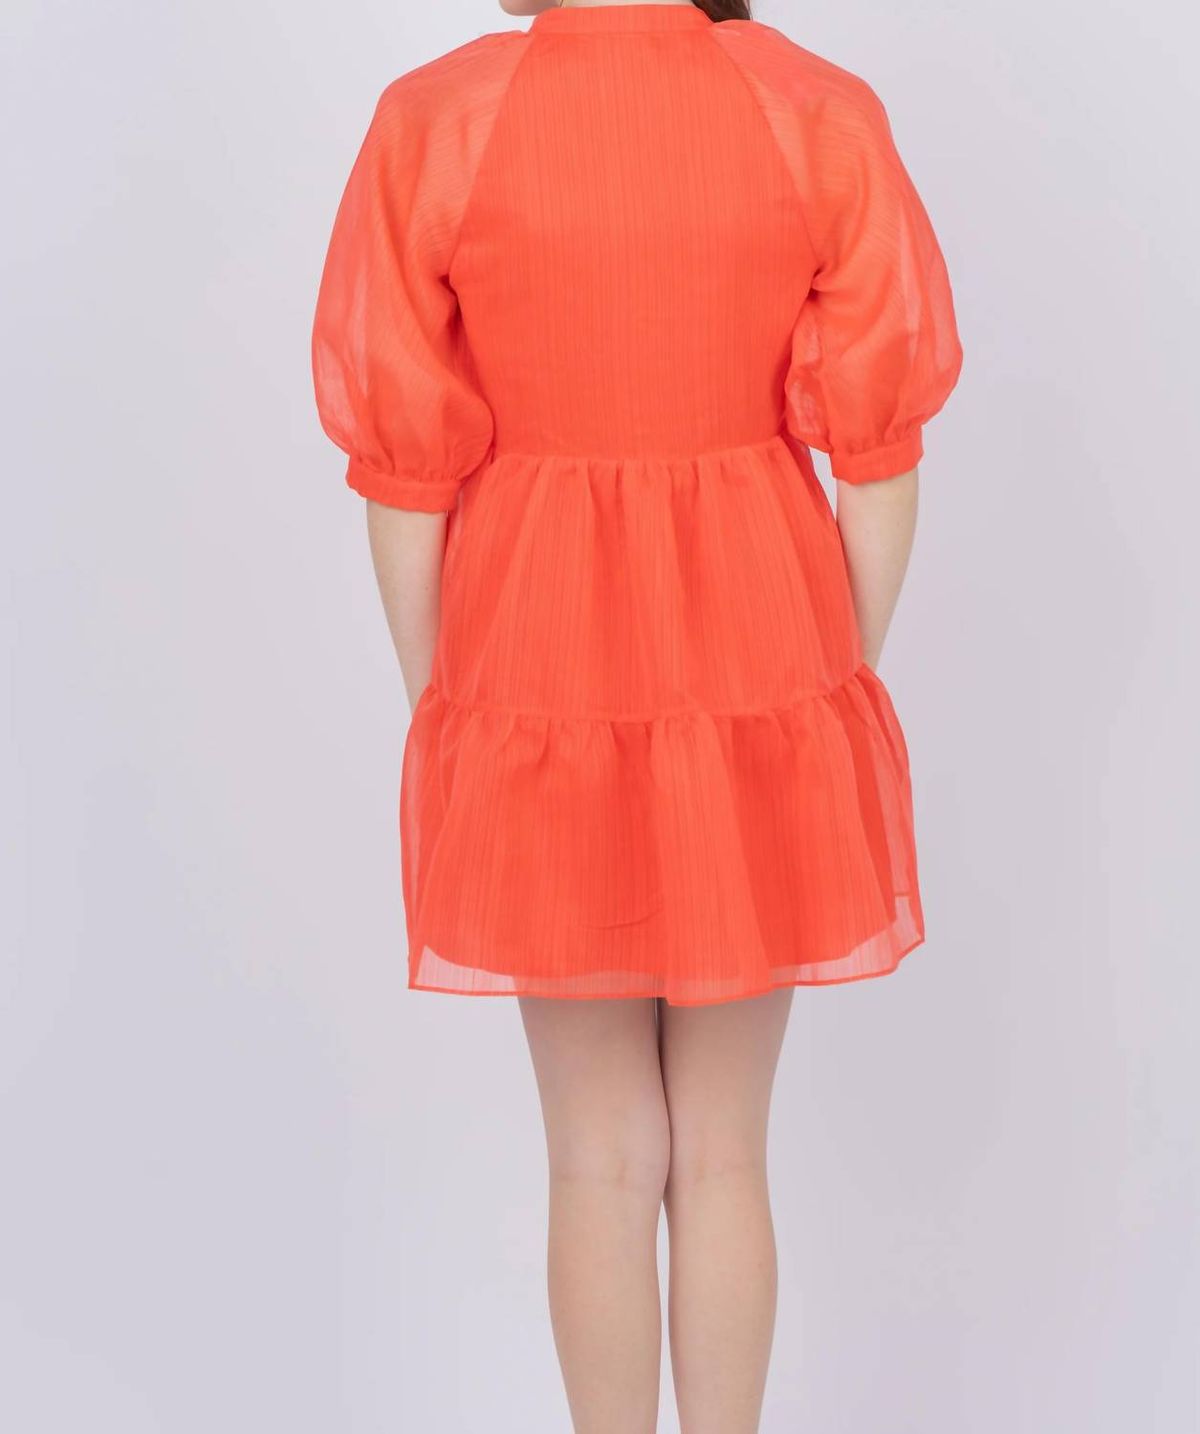 Style 1-385356995-2901 Amanda Uprichard Size M Orange Cocktail Dress on Queenly